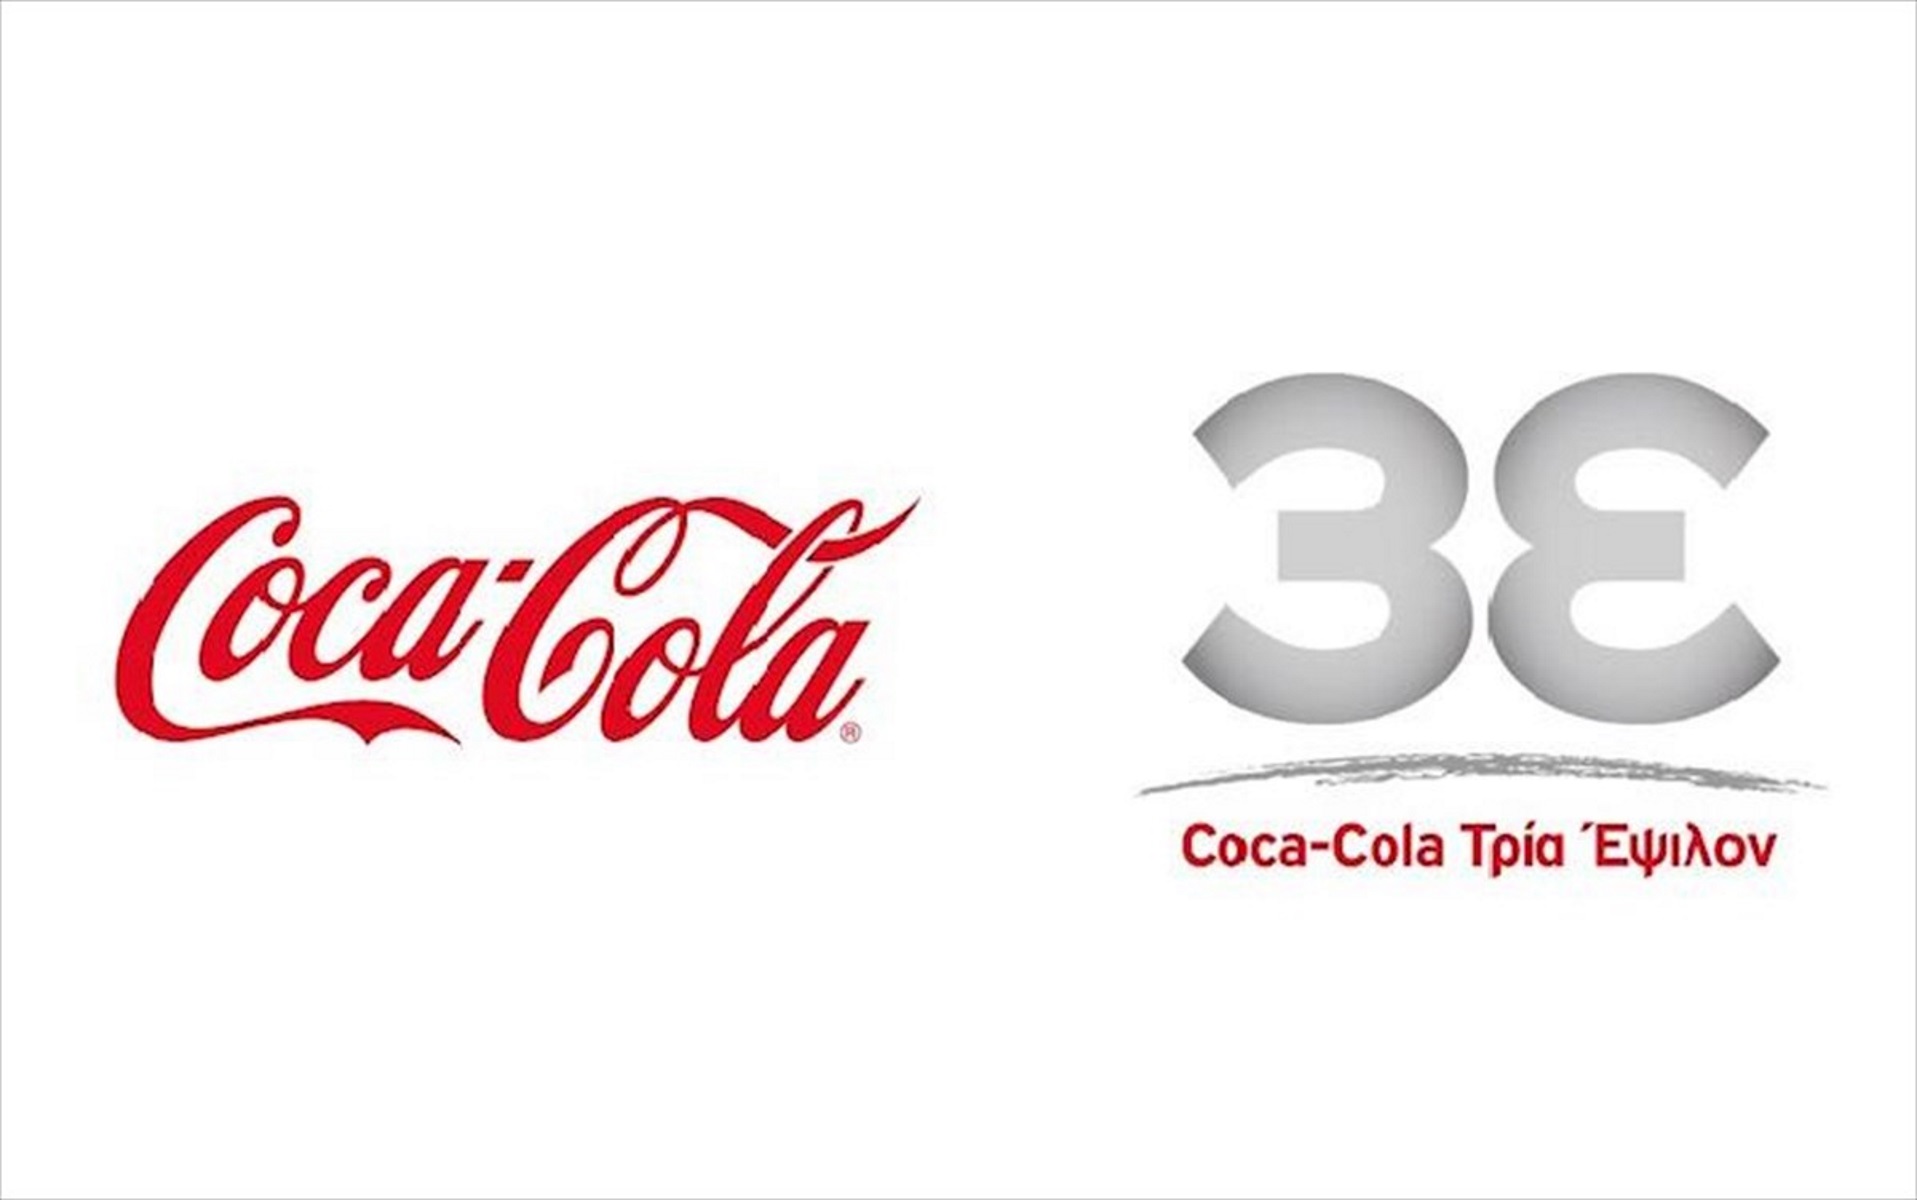 Coca-Cola Τρία Έψιλον: Η συμμετοχή στη HoReCa και τα σχέδια στην επαγγελματική εστίαση